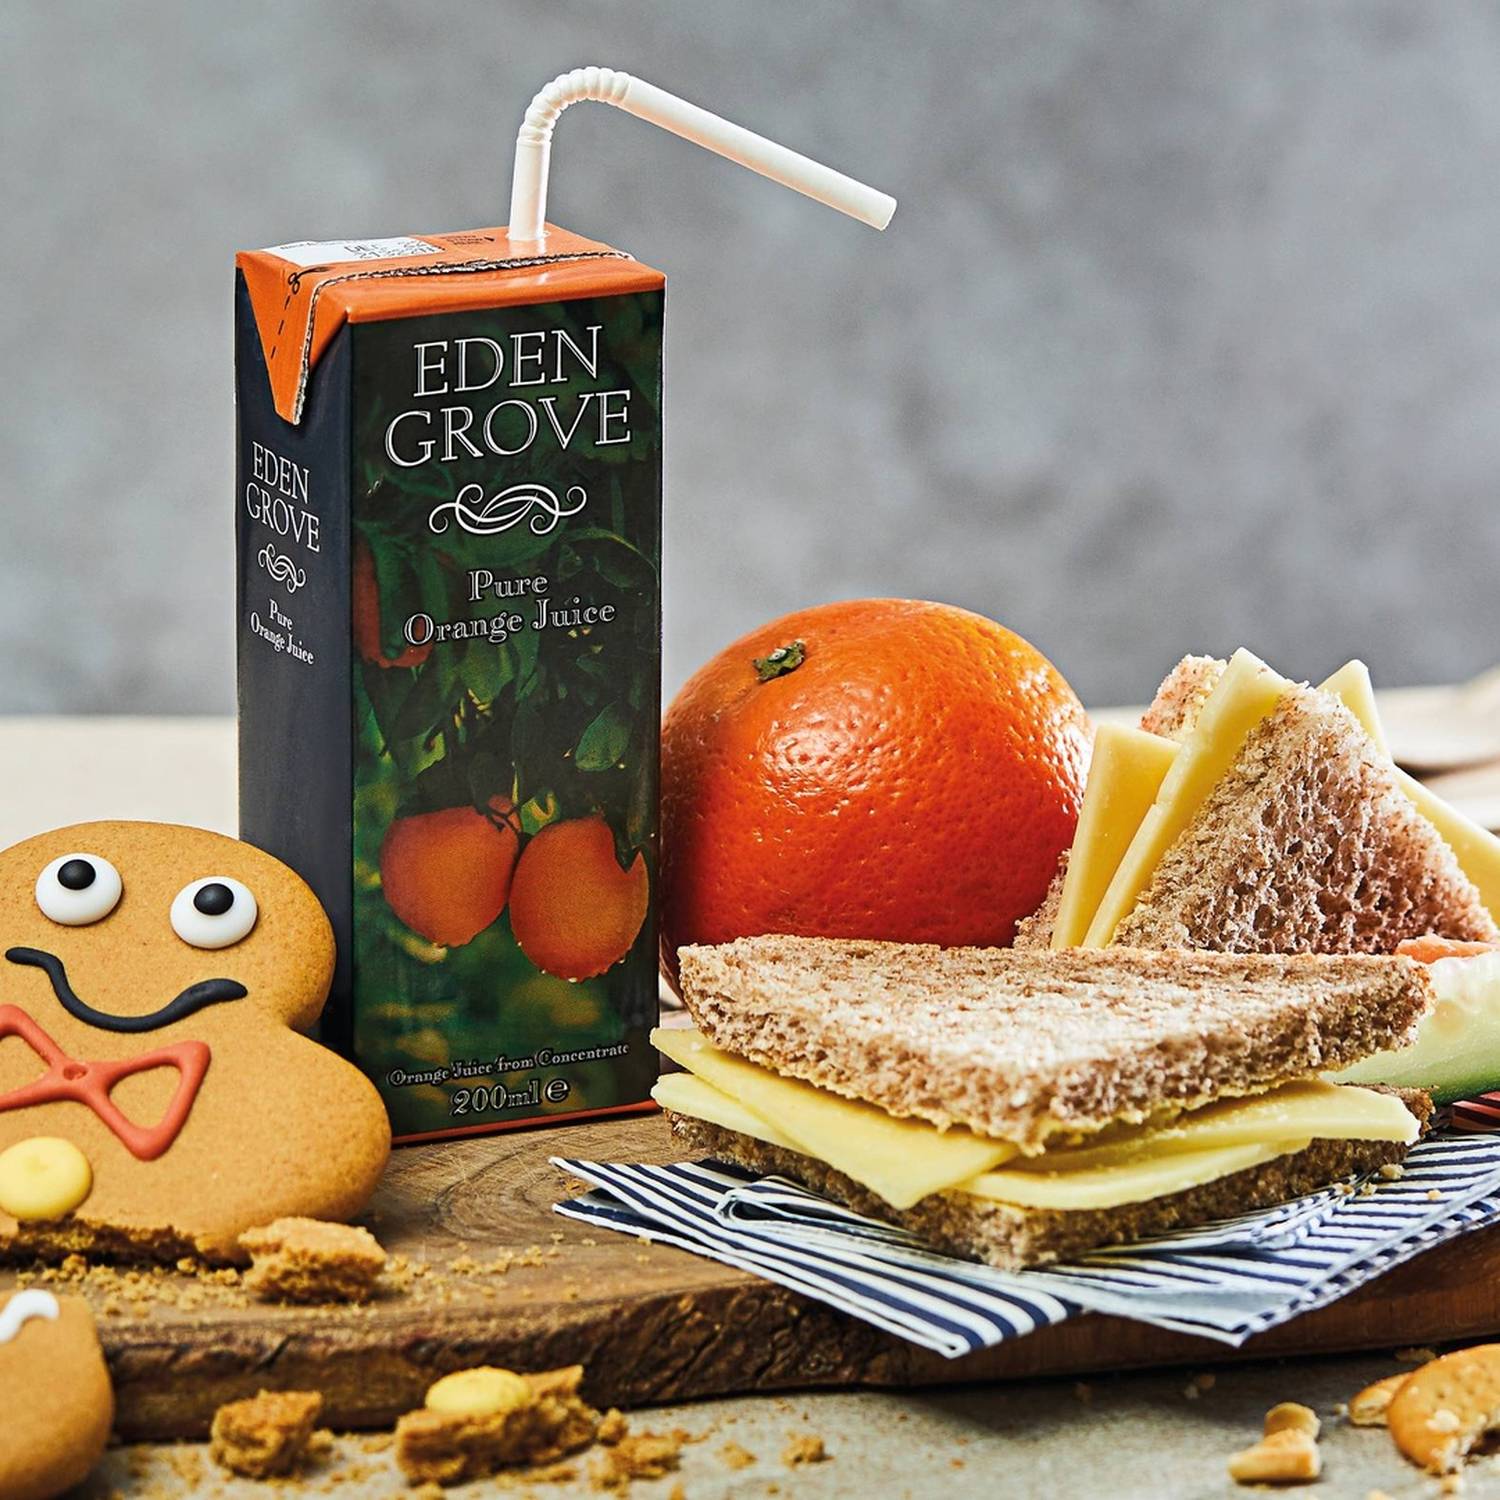 Eden Grove Pure Orange Juice 200ml